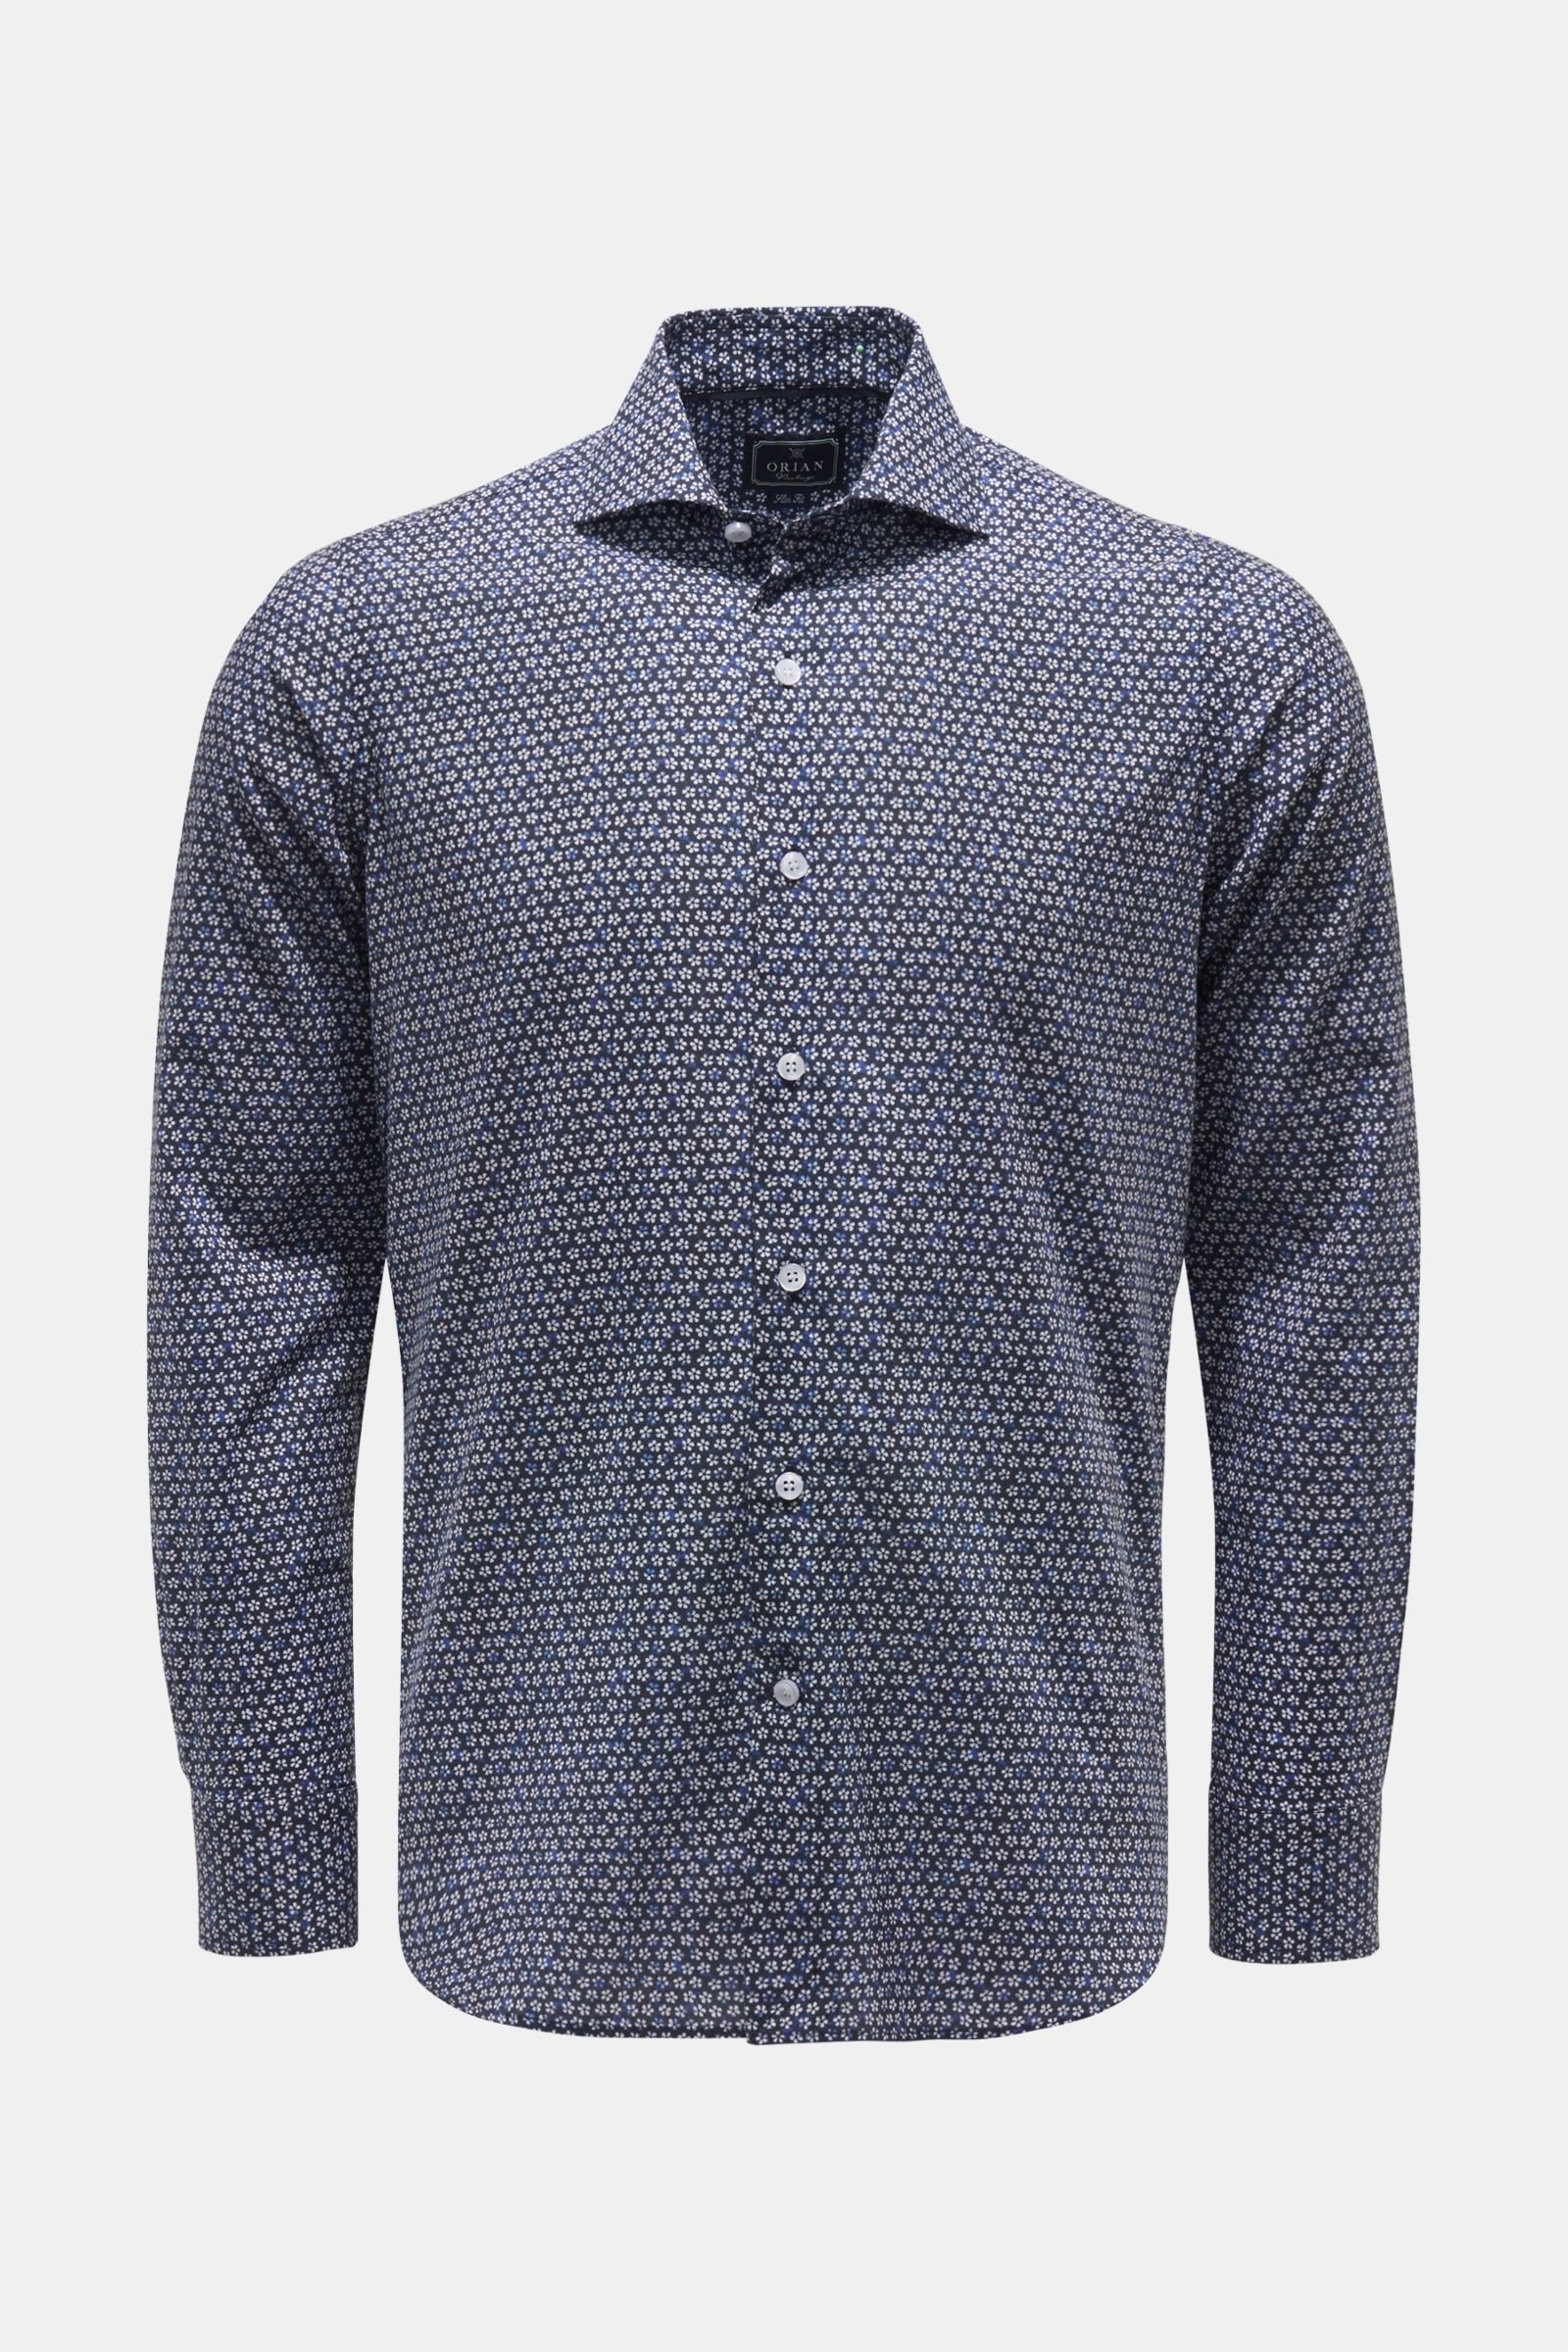 Casual shirt shark collar navy patterned